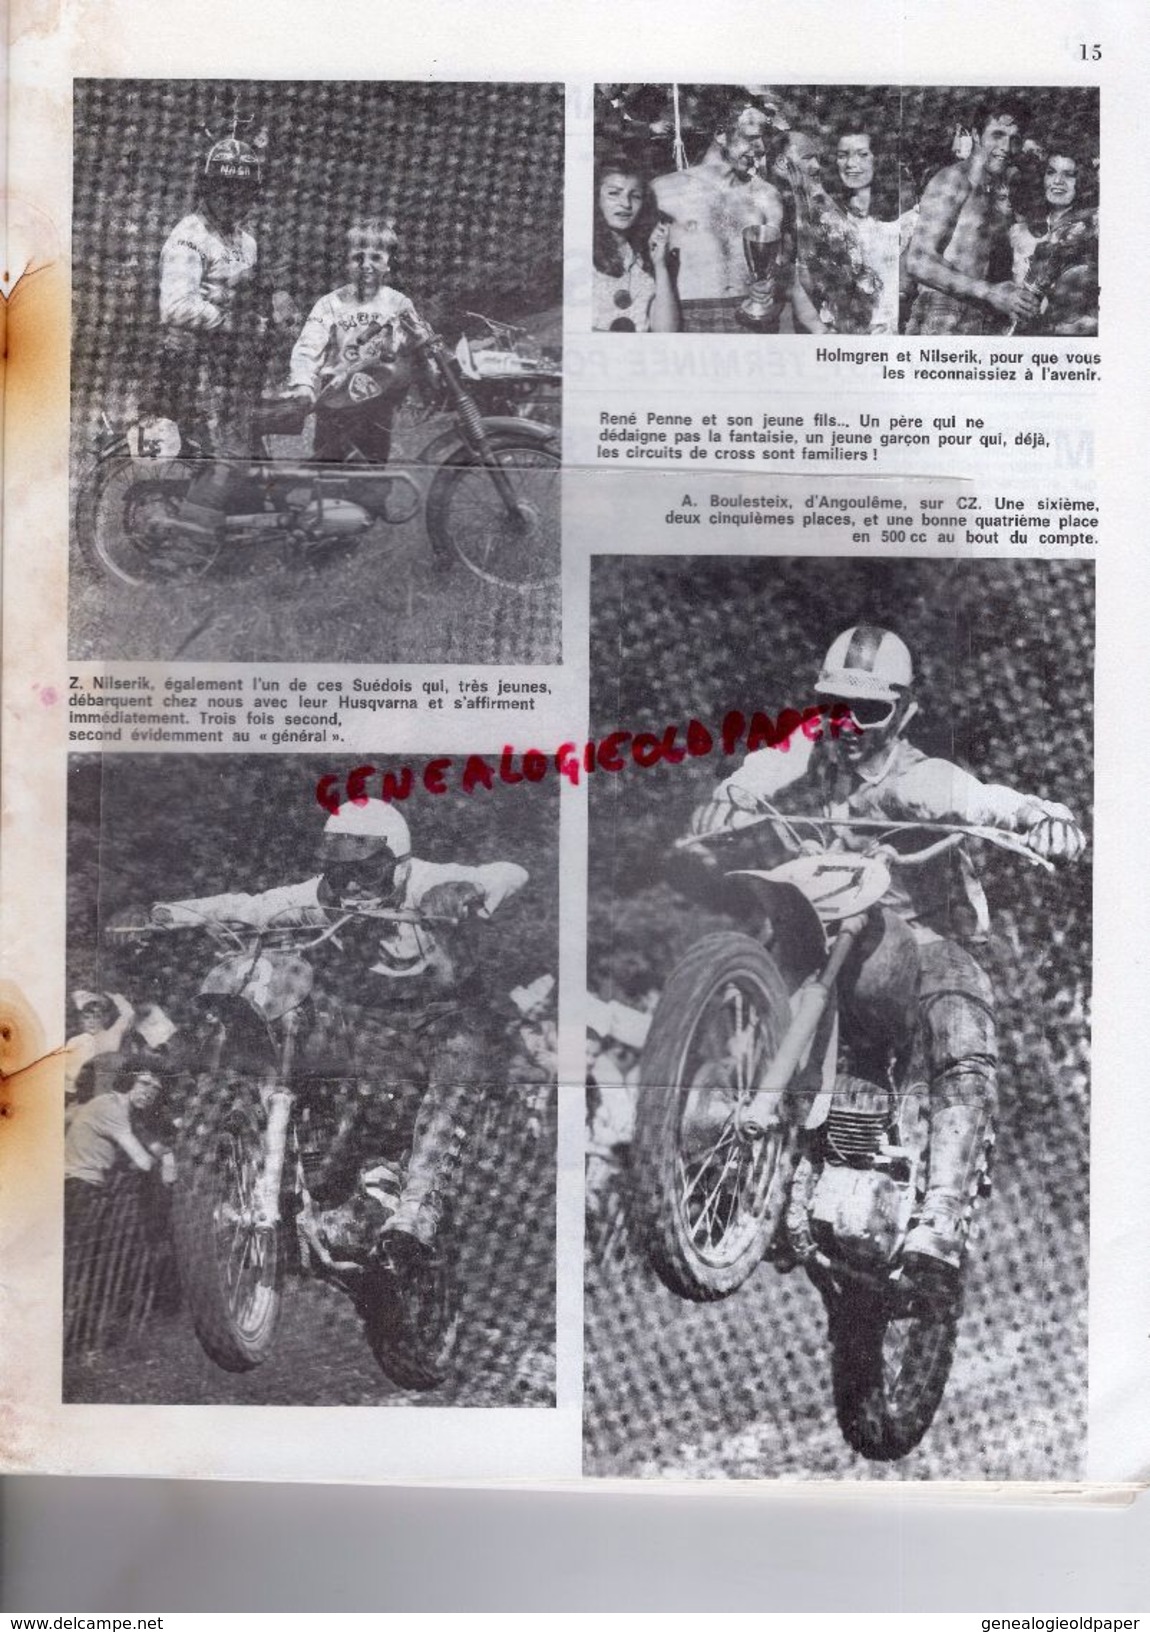 MOTO REVUE - REVUE 13 JUIN 1970- N° 1984- LEON OSSA- CROSS A SAINT AFFRIQUE -YAMAHA 350 STREET-CIRCUIT ANNEMASSE- - Motorrad